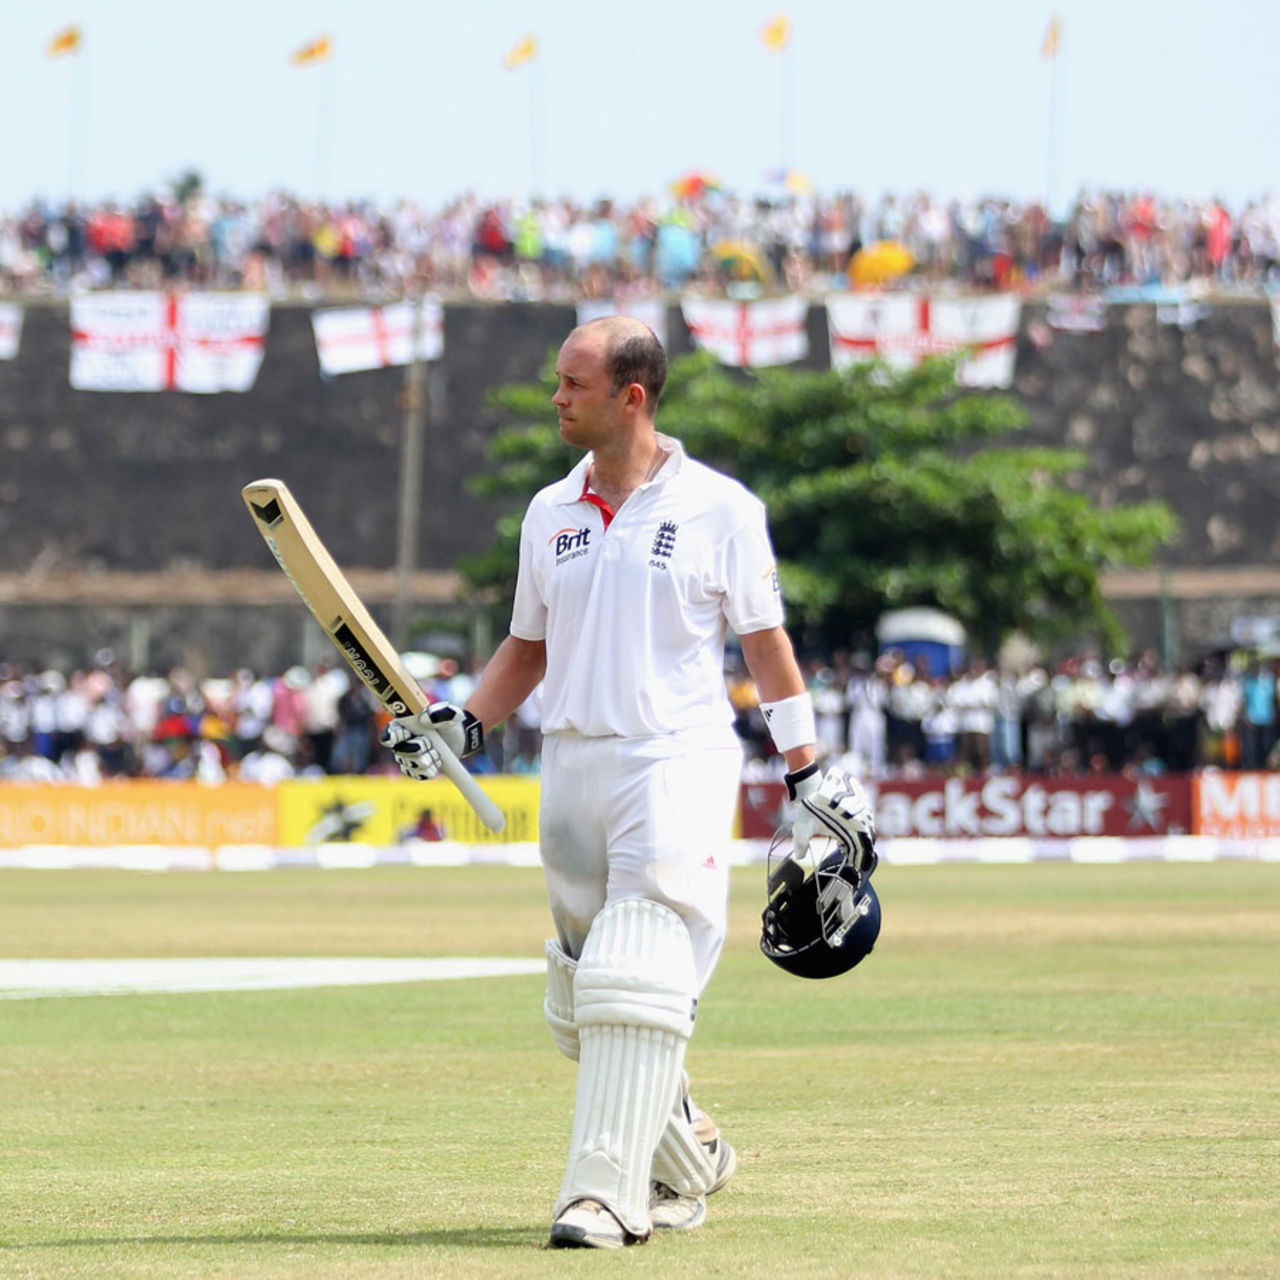 Jonathan Trott walks off after being dismissed for 112, Sri Lanka v England, 1st Test, Galle, 4th day, March 29, 2012